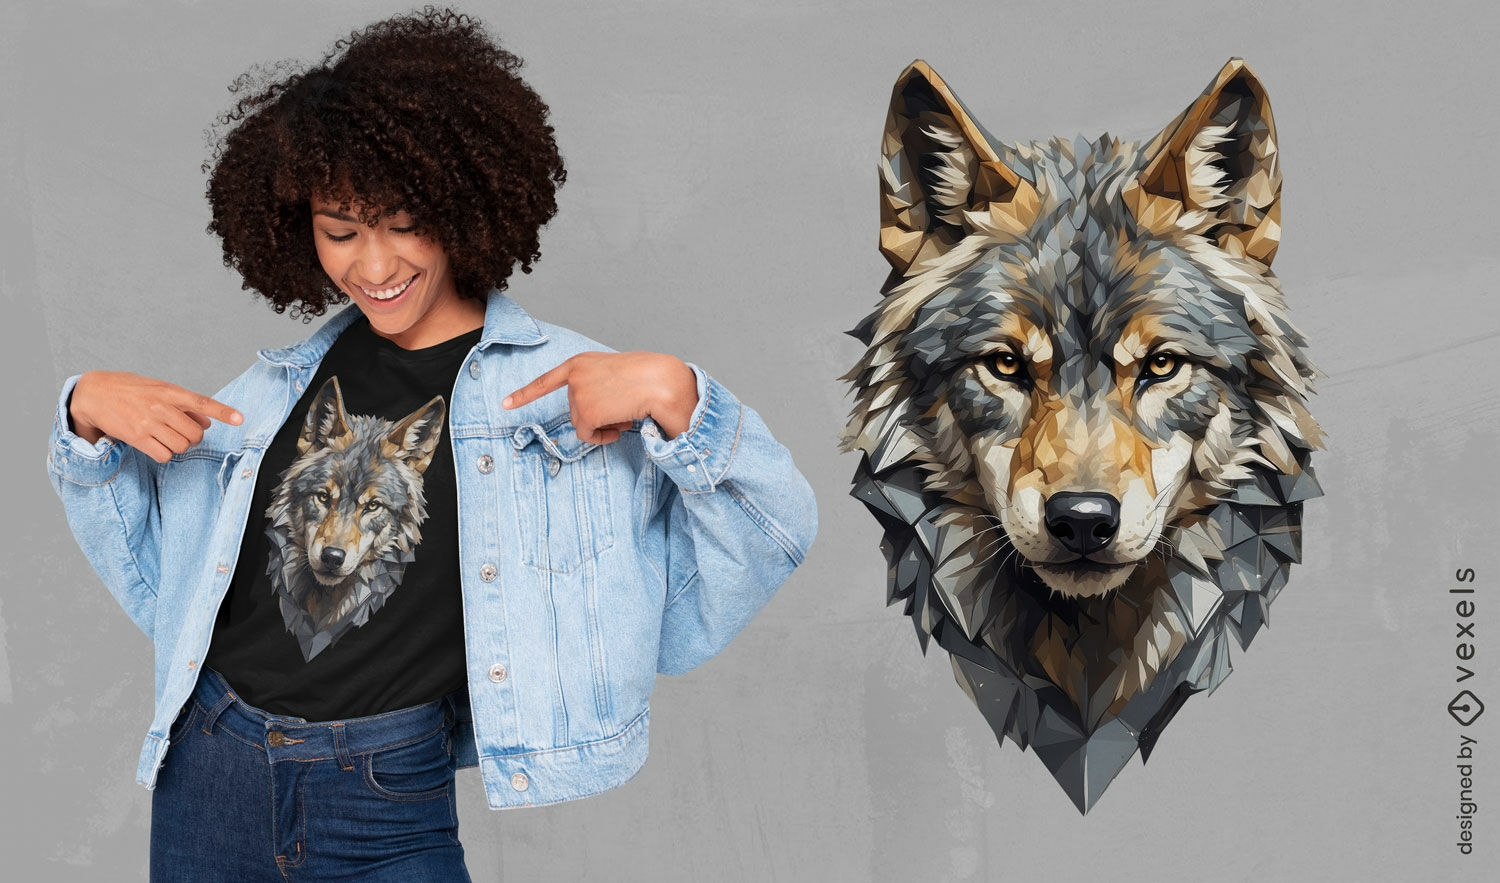 Diseño de camiseta geométrica con cabeza de lobo.